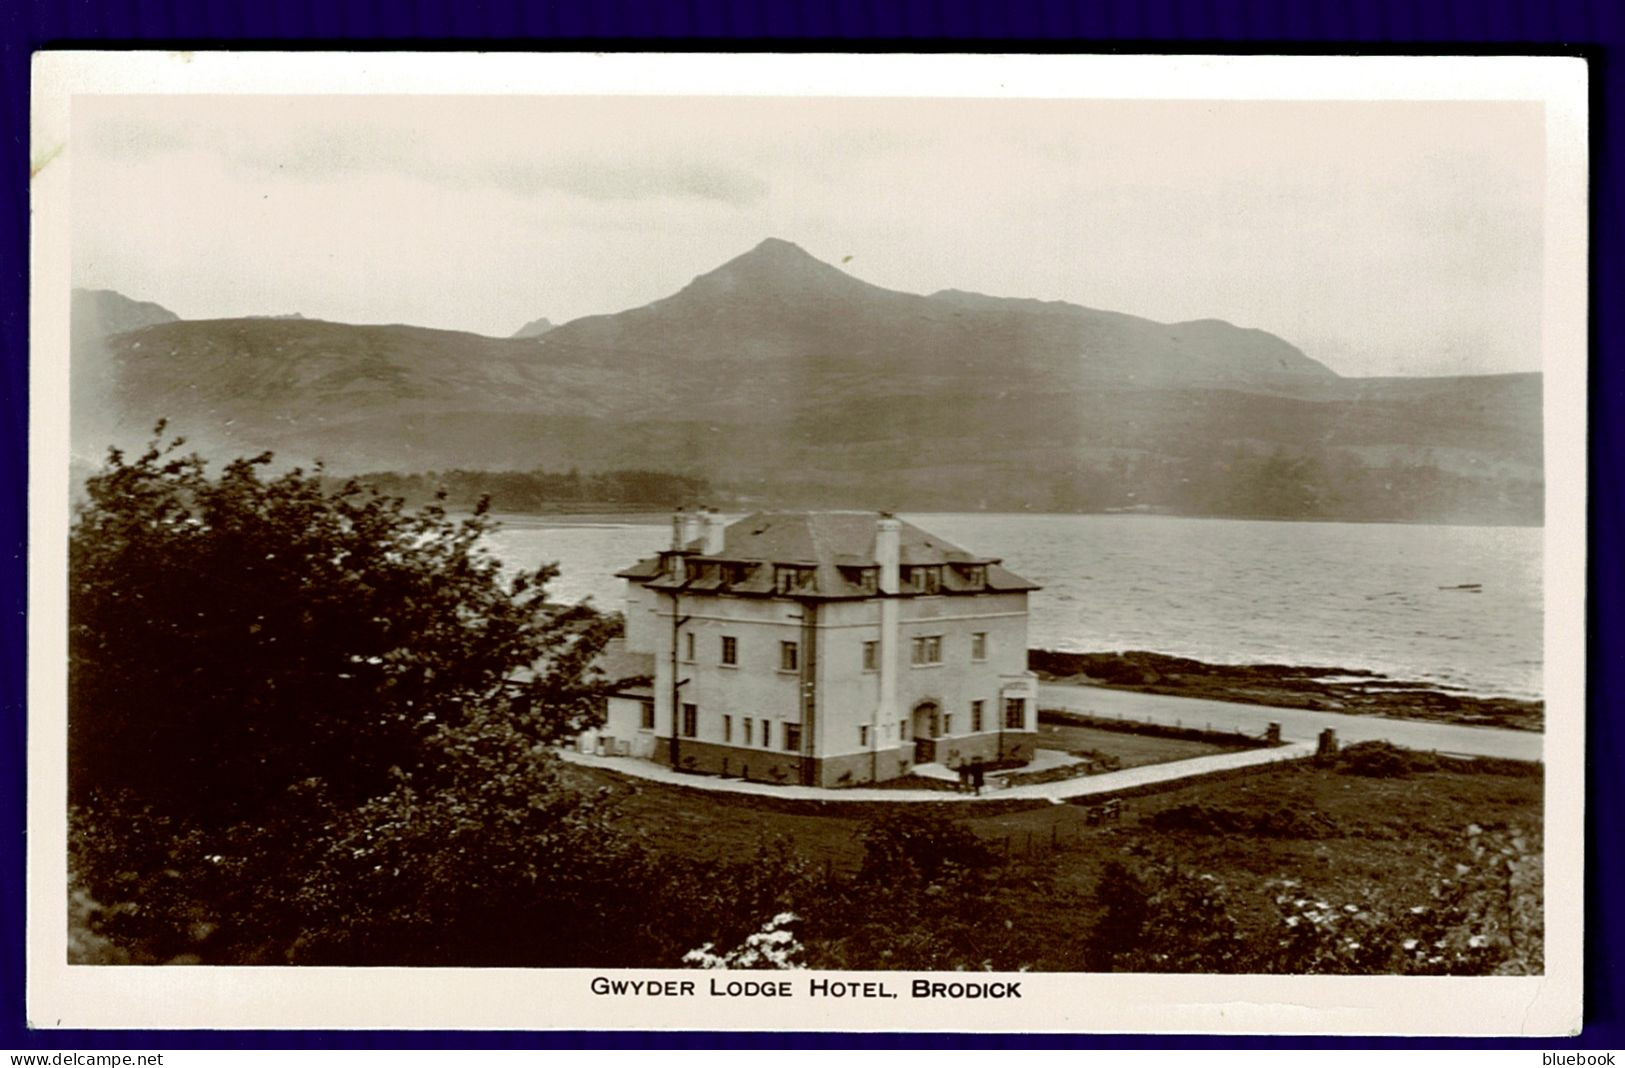 Ref 1643 - 1932 Real Photo Postcard - Gwyder Lodge Hotel - Brodick Arran Ayrshire Scotland - Ayrshire